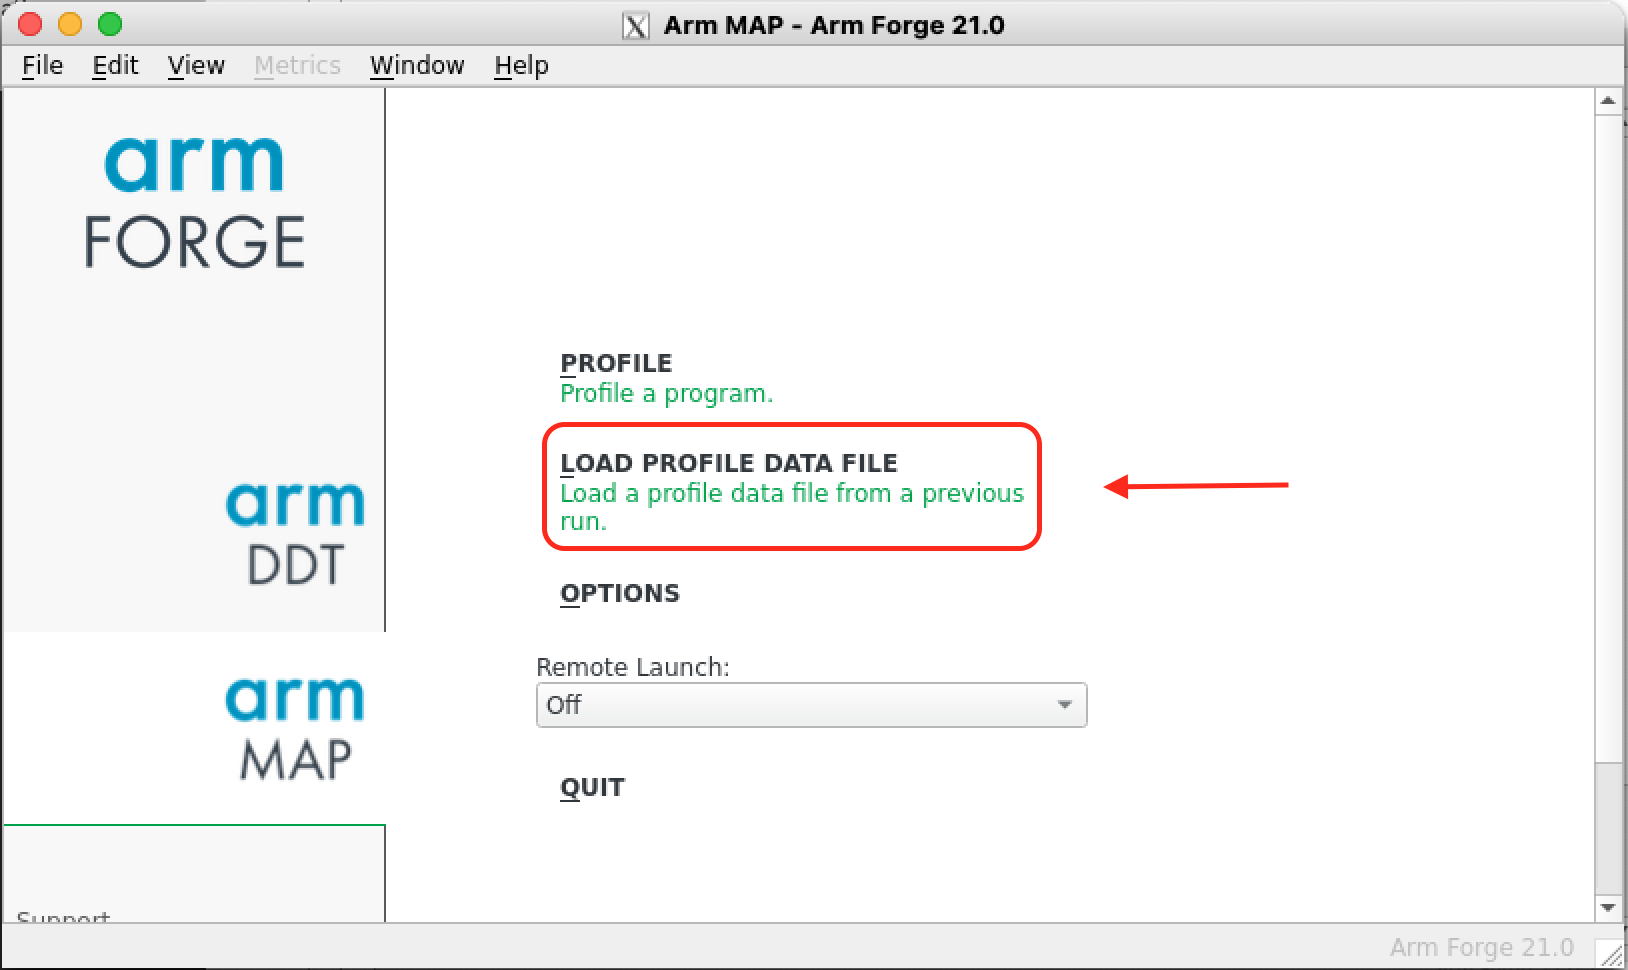 load profile data file